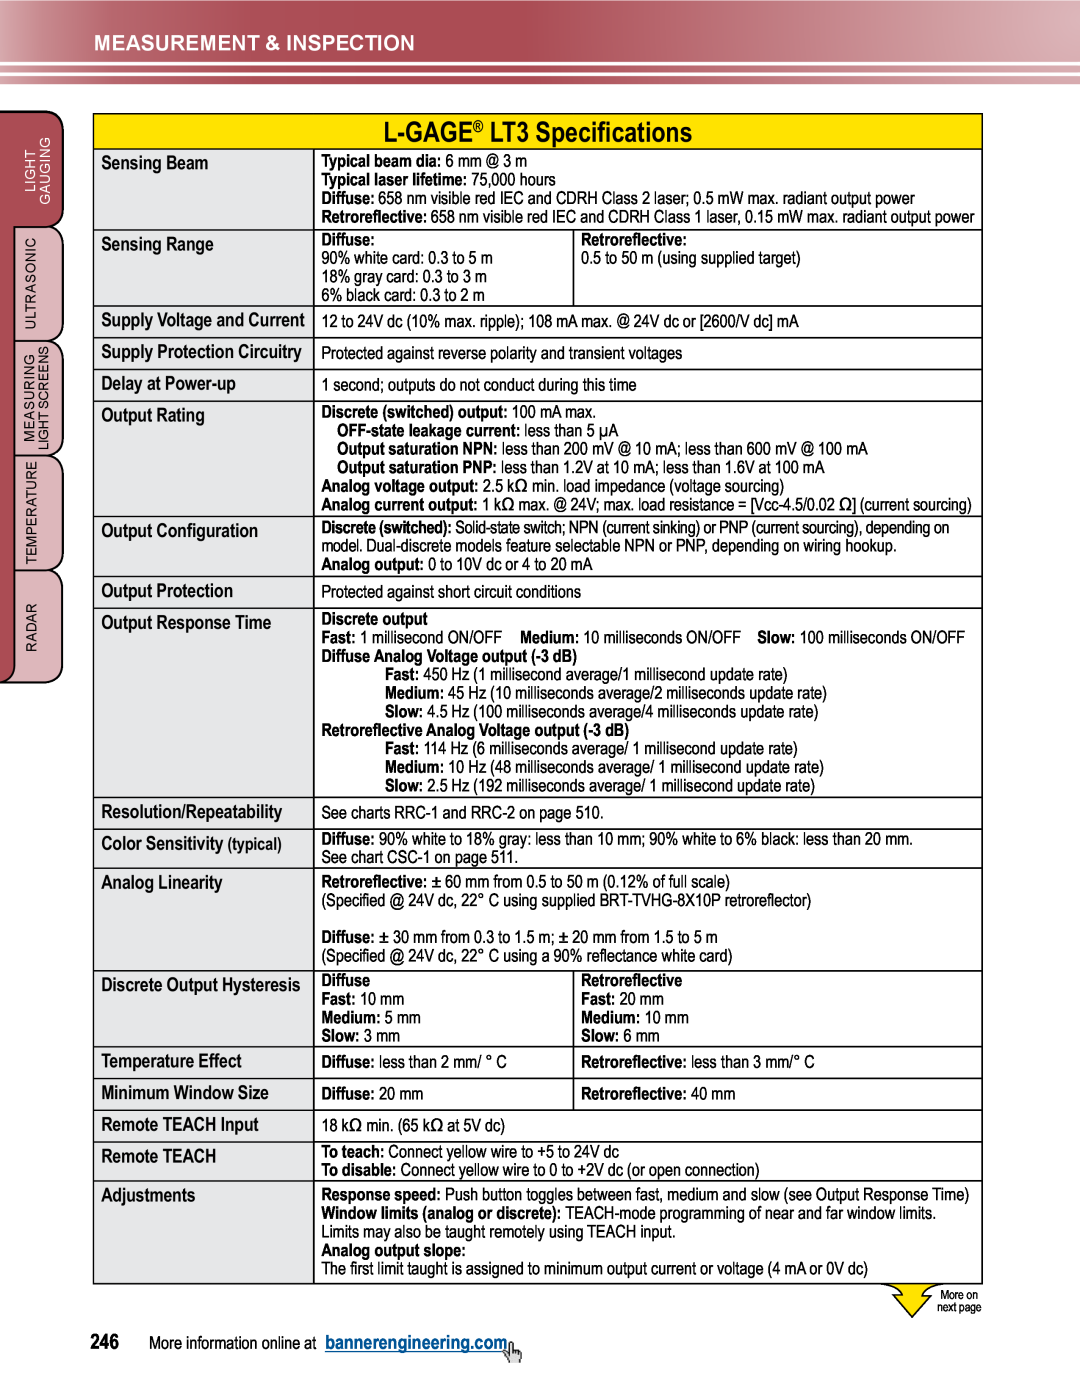 Banner manual L-GAGE LT3 Specifications, Measurement & Inspection 